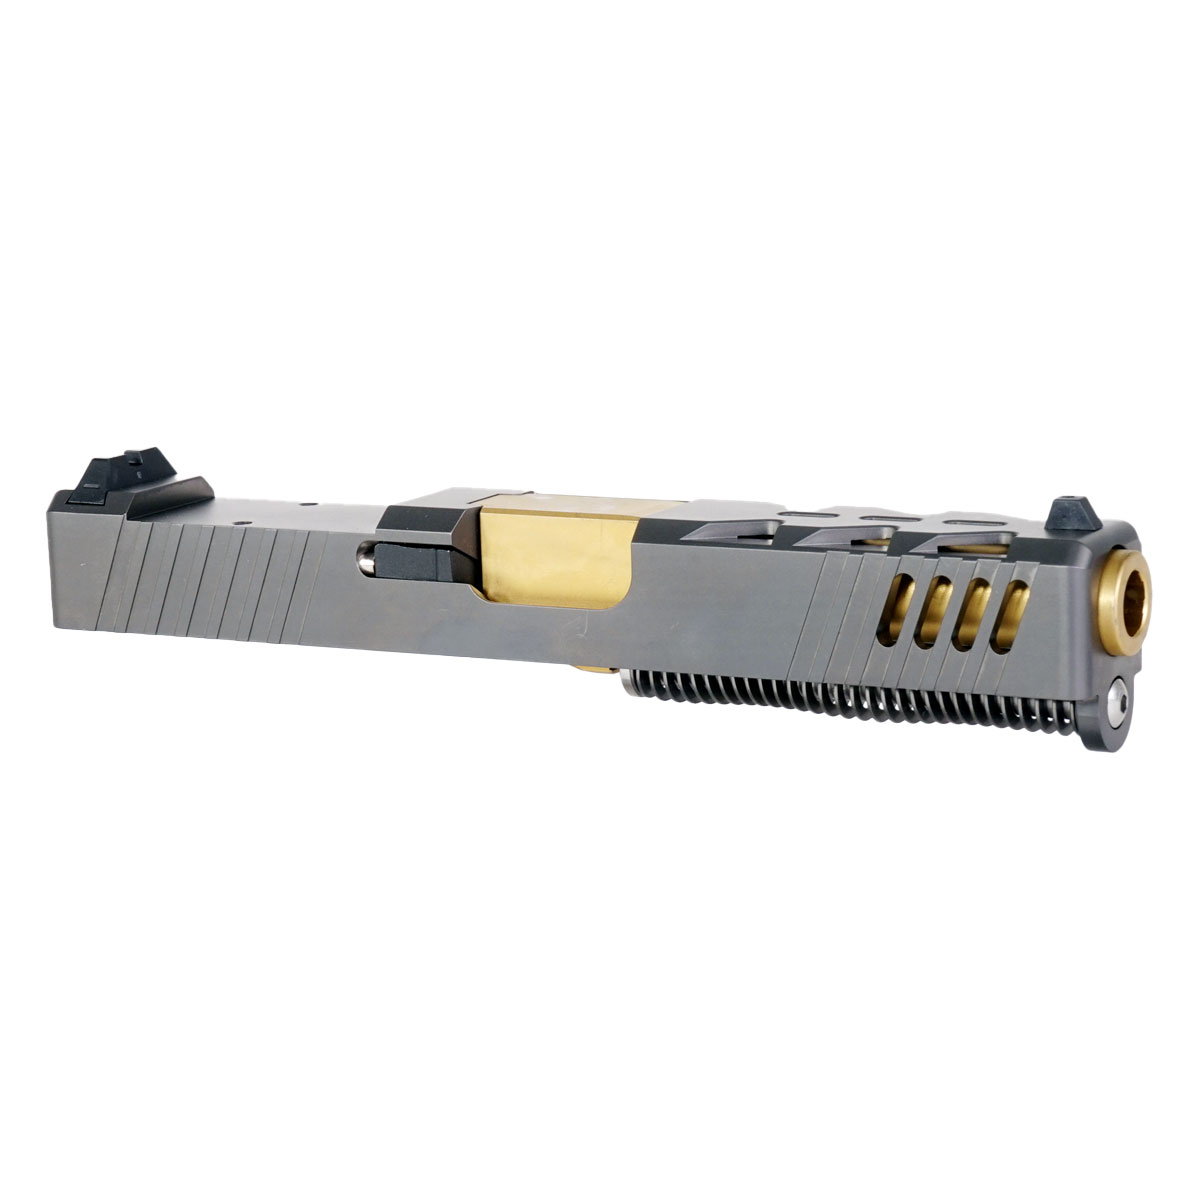 DD 'The Talon' 9mm Complete Slide Kit - Glock 19 Gen 1-3 Compatible